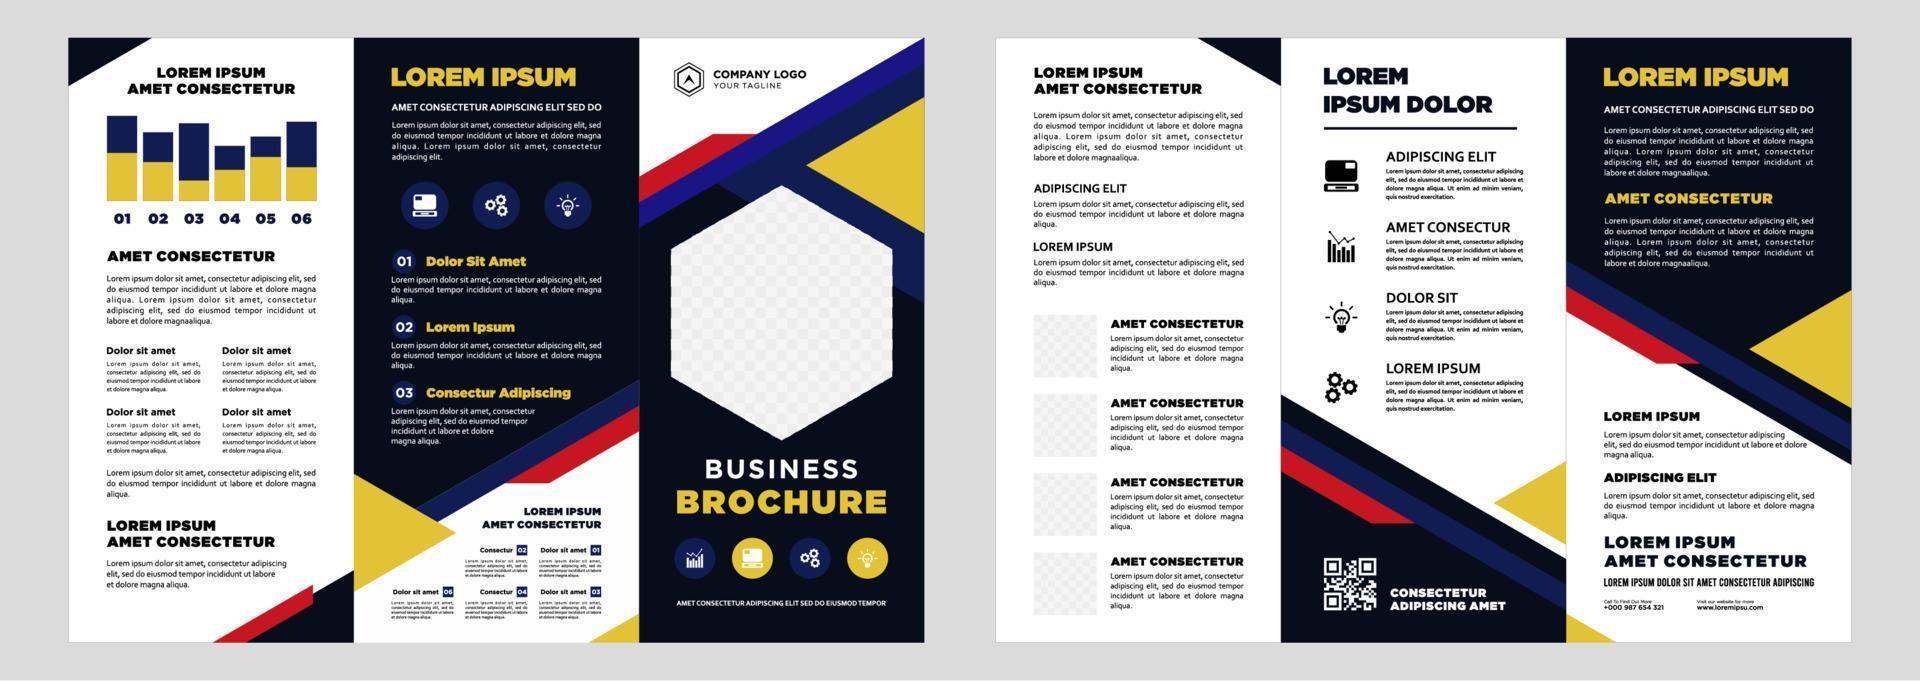 Minimalist business digital marketing trifold brochure template vector